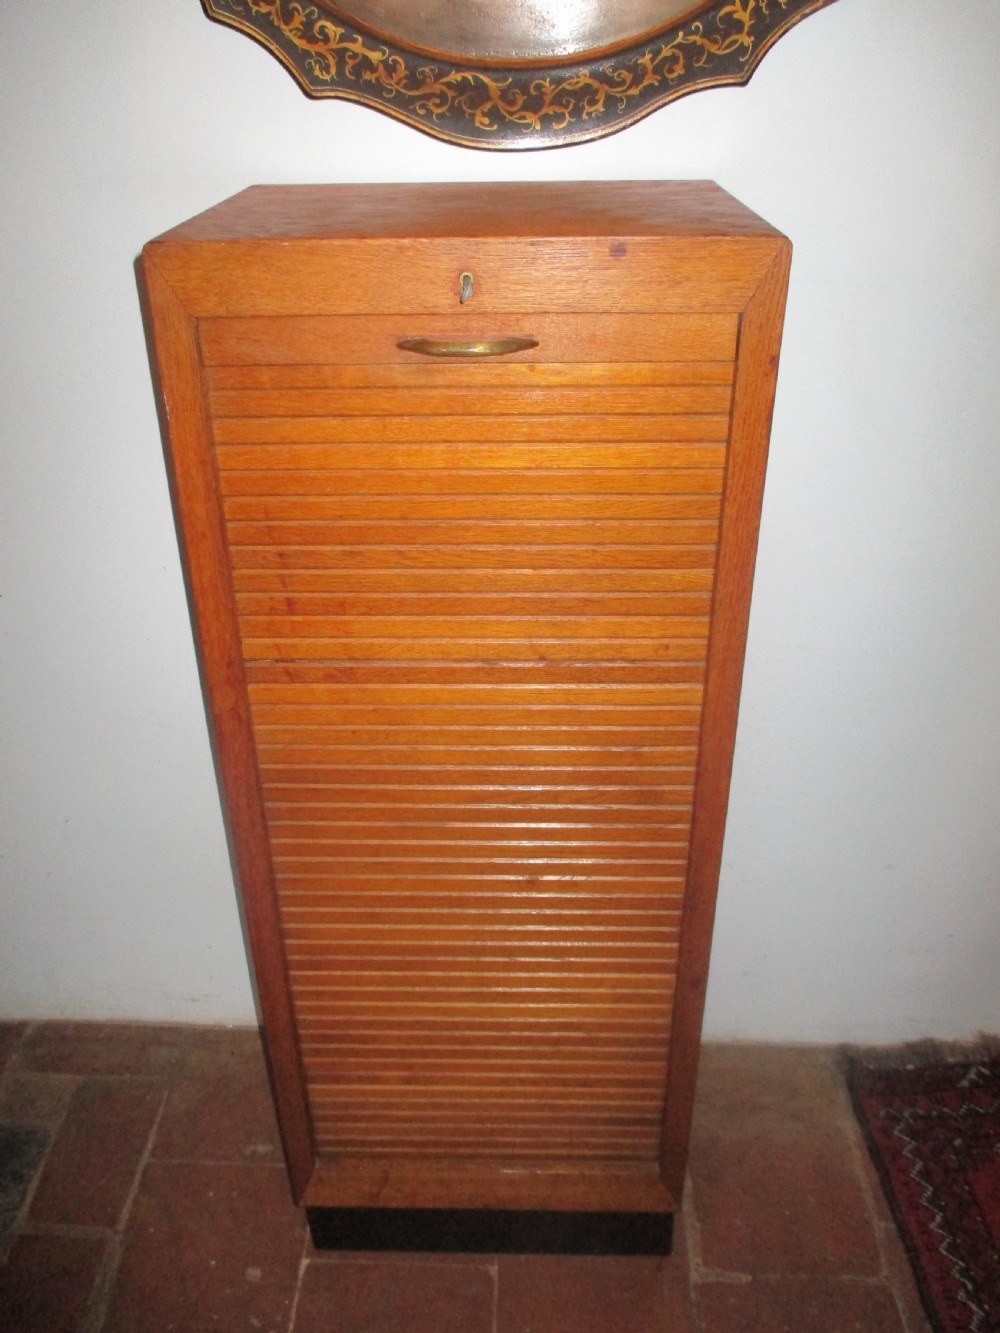 c1930s art deco oak tambour filing cabinet